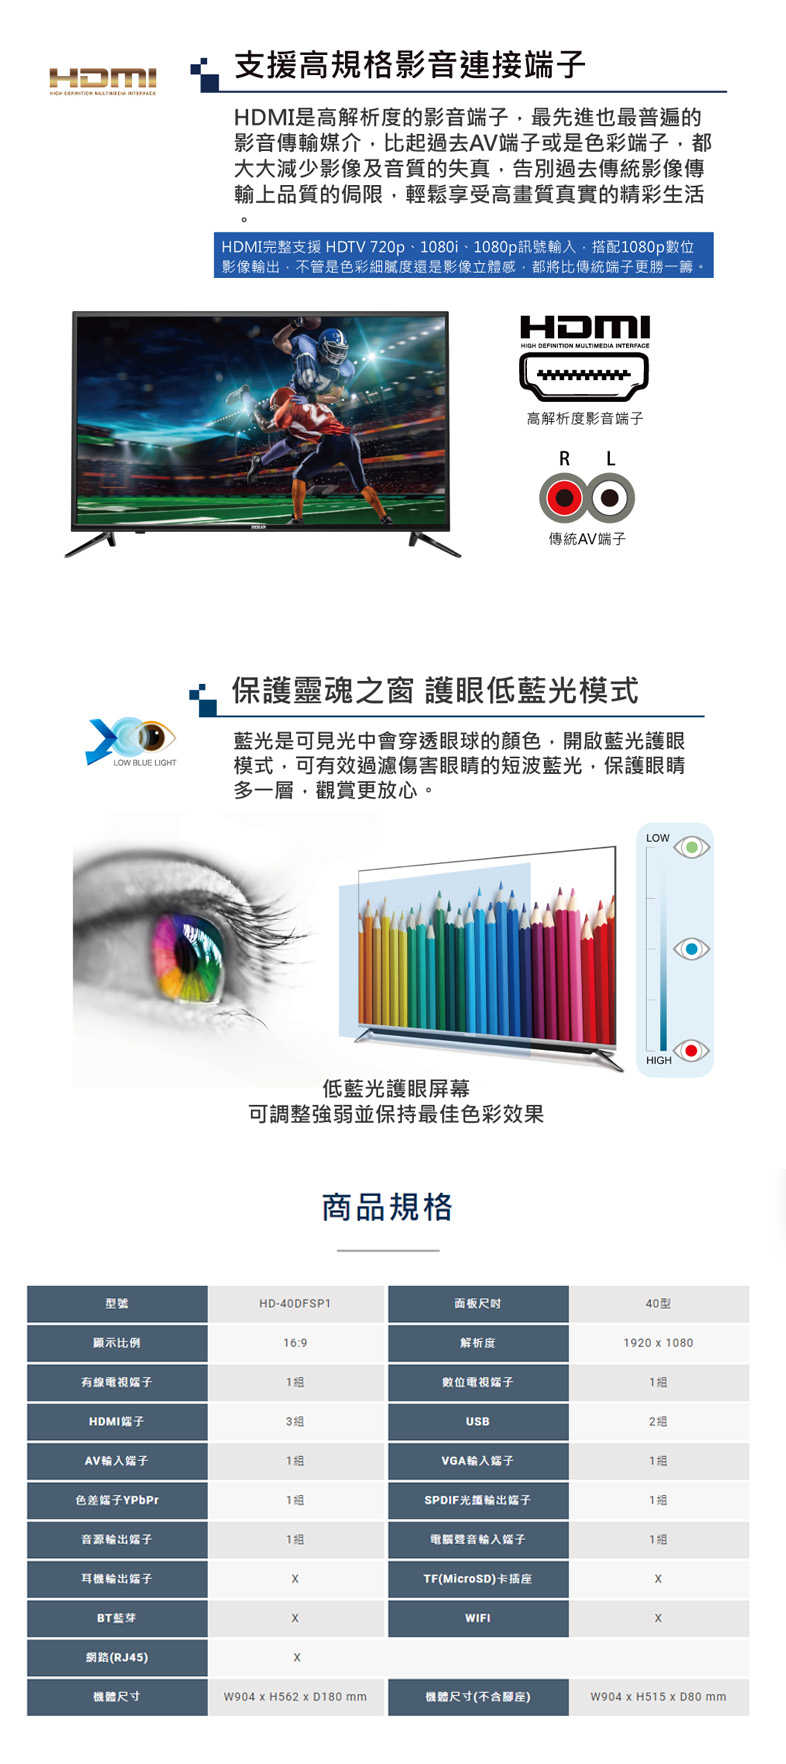 【HERAN 禾聯】43 吋 LED液晶電視 FullHD 超高絢睛彩屏技術 高解析 HD-43DFSP1